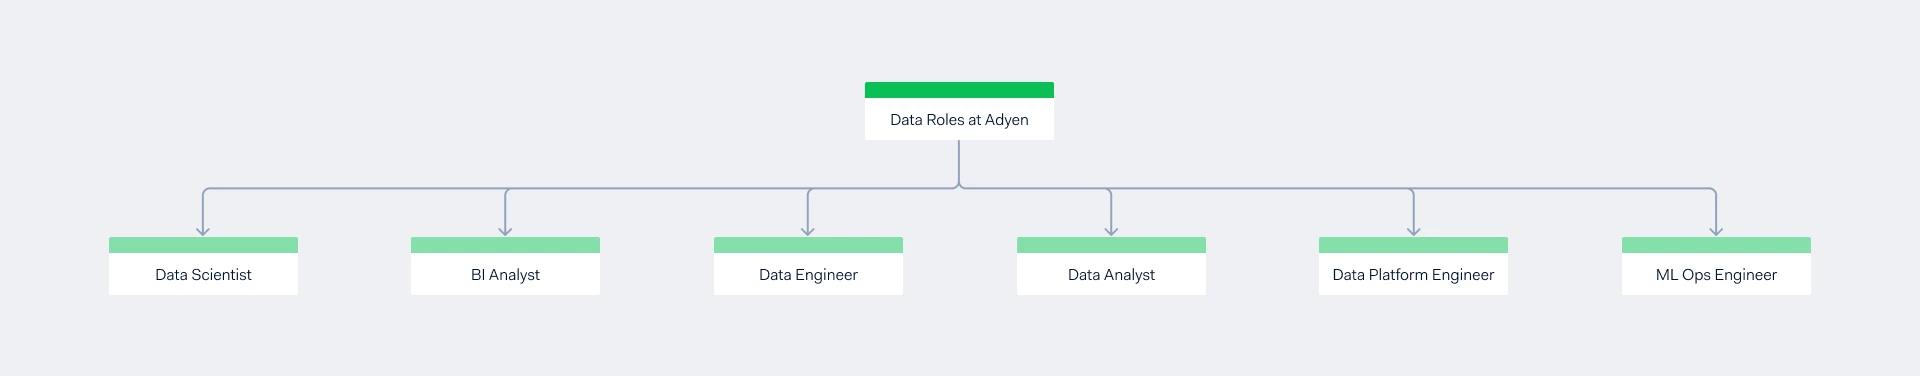 Image umbrella showing data roles at adyen: data scientist, BI Analyst, Data Engineers, Data Analyst, Data Platform Engineer and ML Ops Engineer